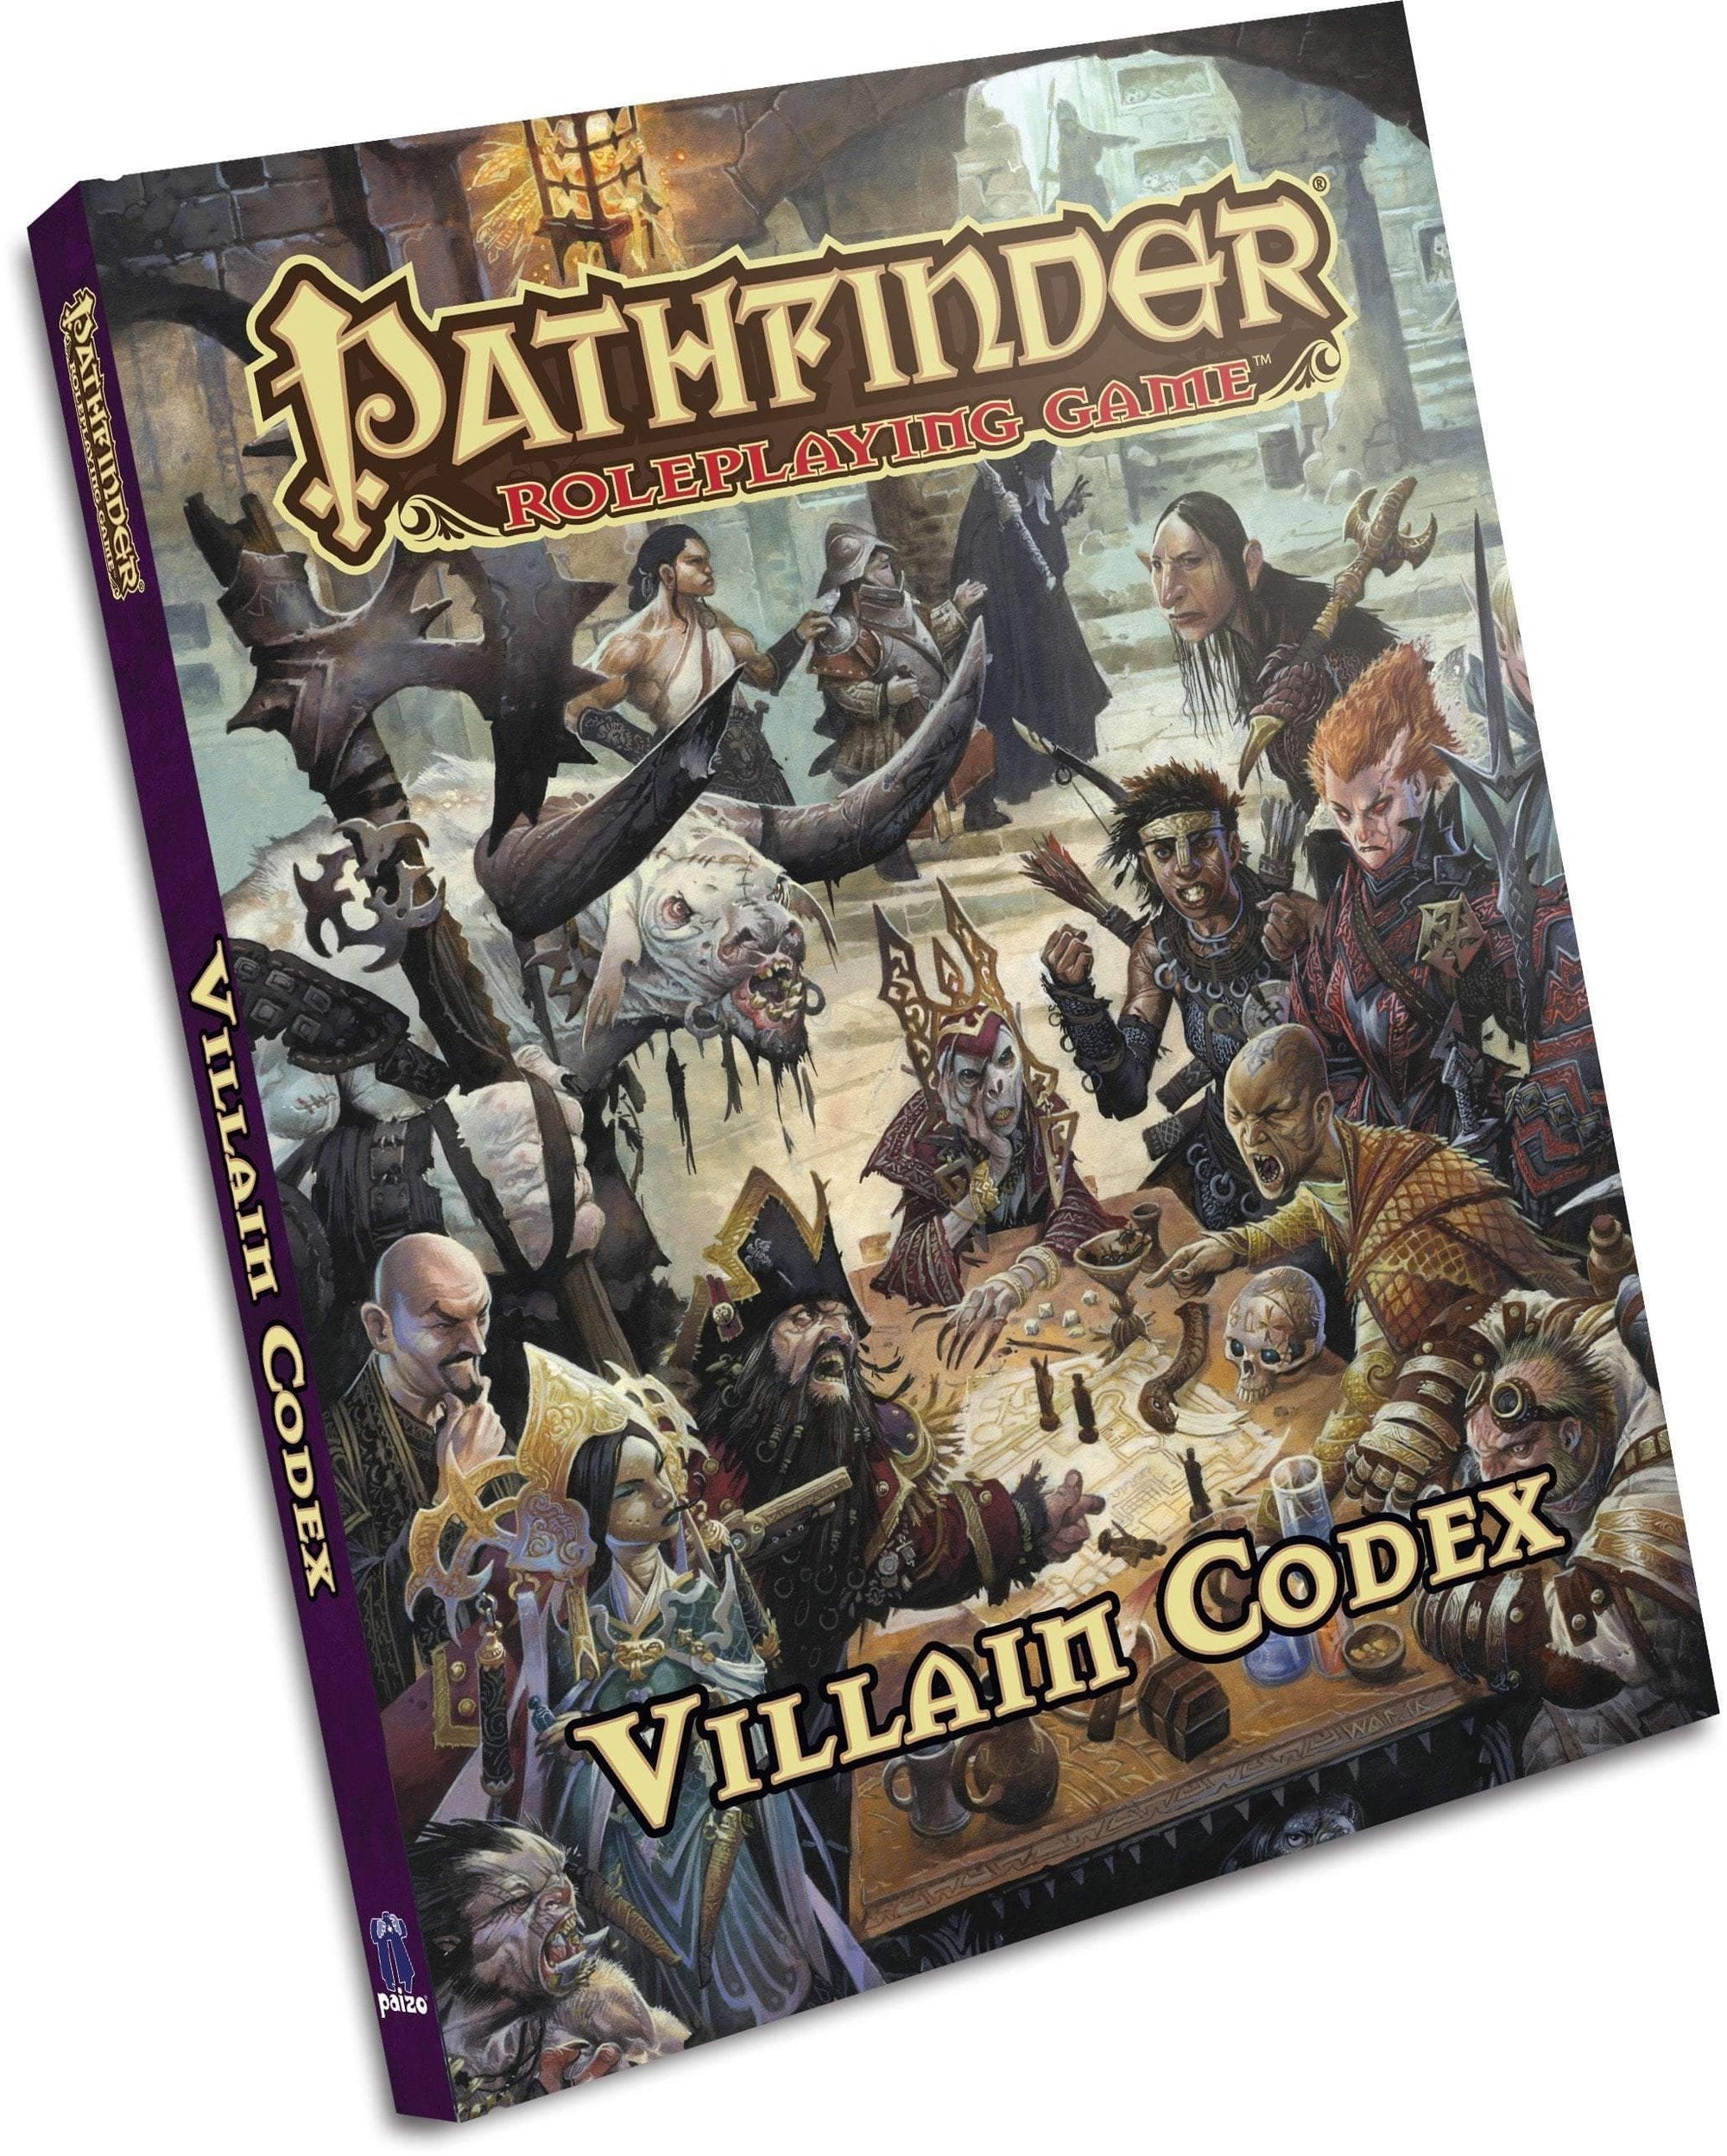 Pathfinder: Villain Codex Retail Role Playing Game The Game Steward